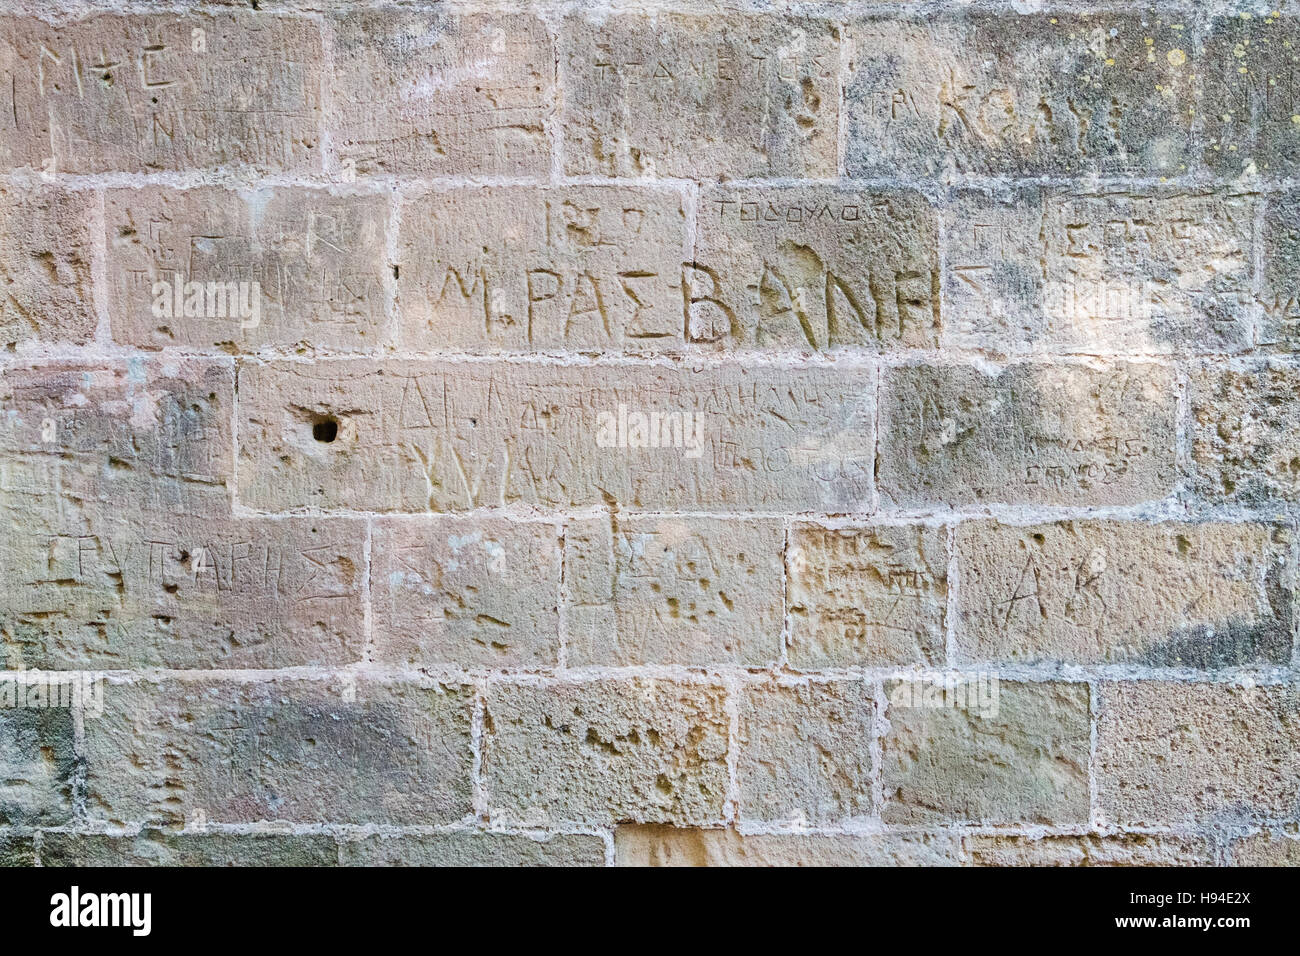 Pared de ladrillo antiguo fondo con graffiti griego tallado en ella. Foto de stock